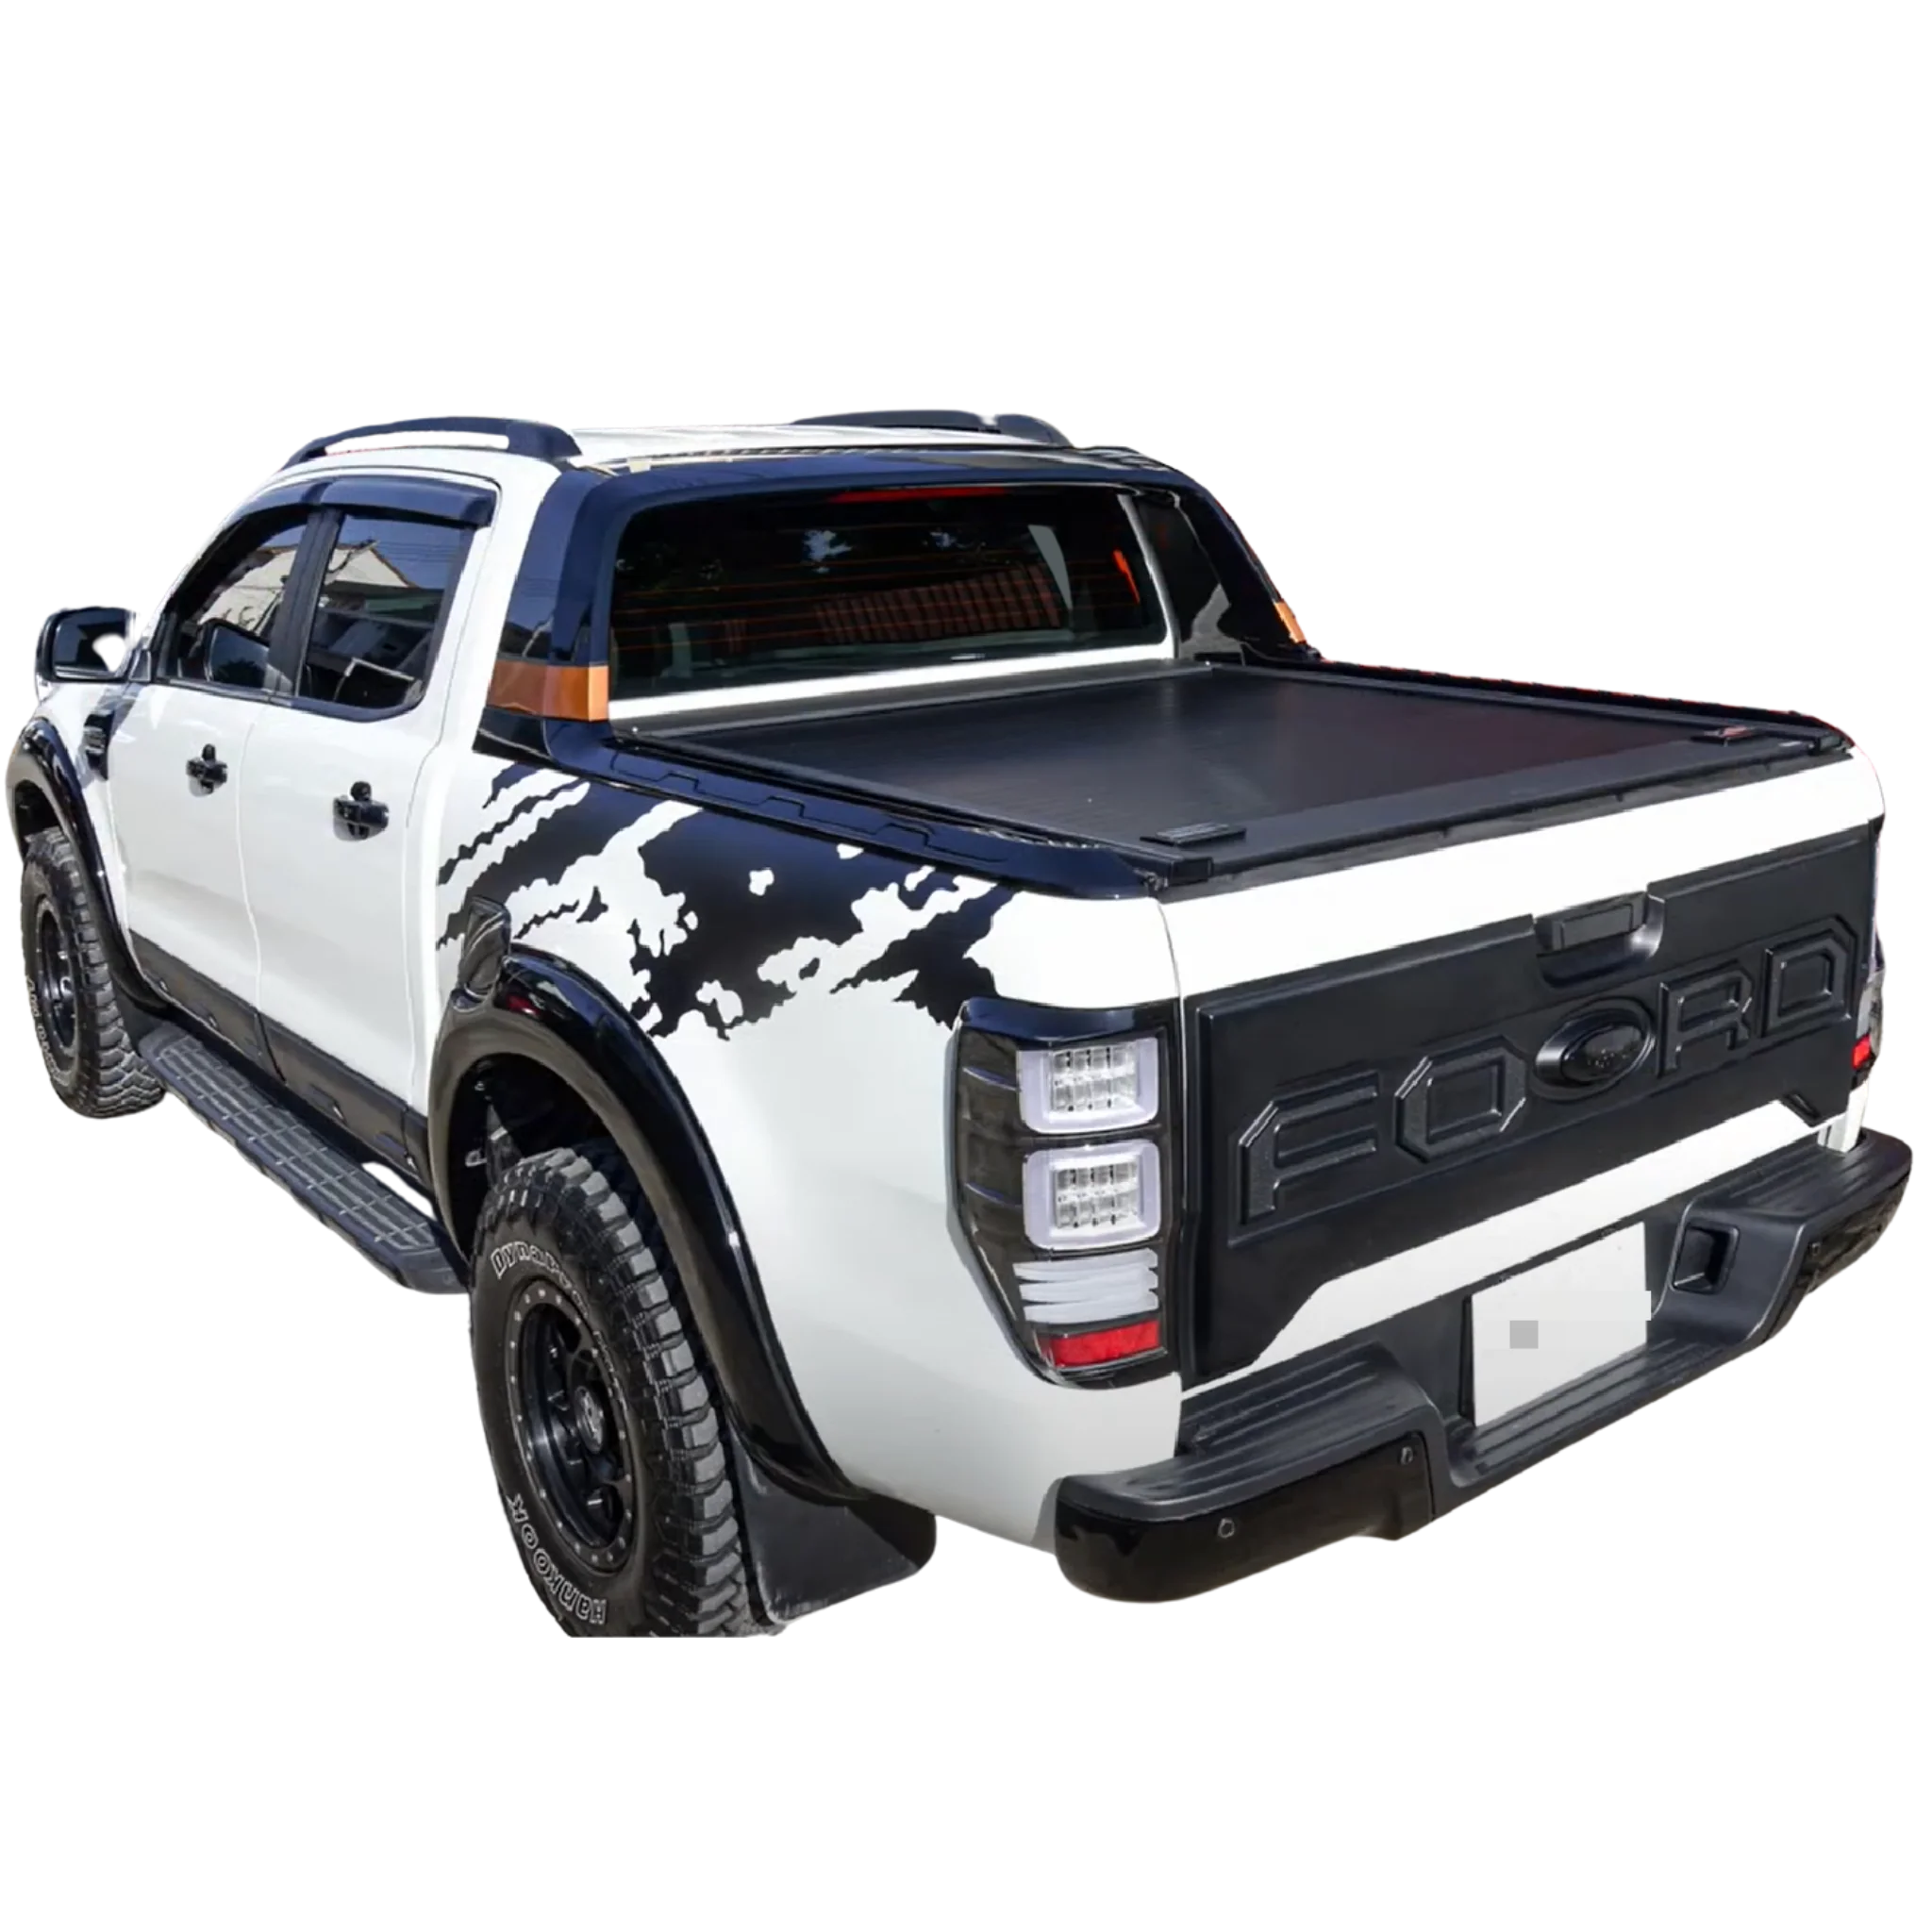 

Pickup Truck Car 4x4 Accessories Aluminium Roller Lid Shutter Top Retractable Roll Up Tonneau Cover For Ford Ranger raptor F150